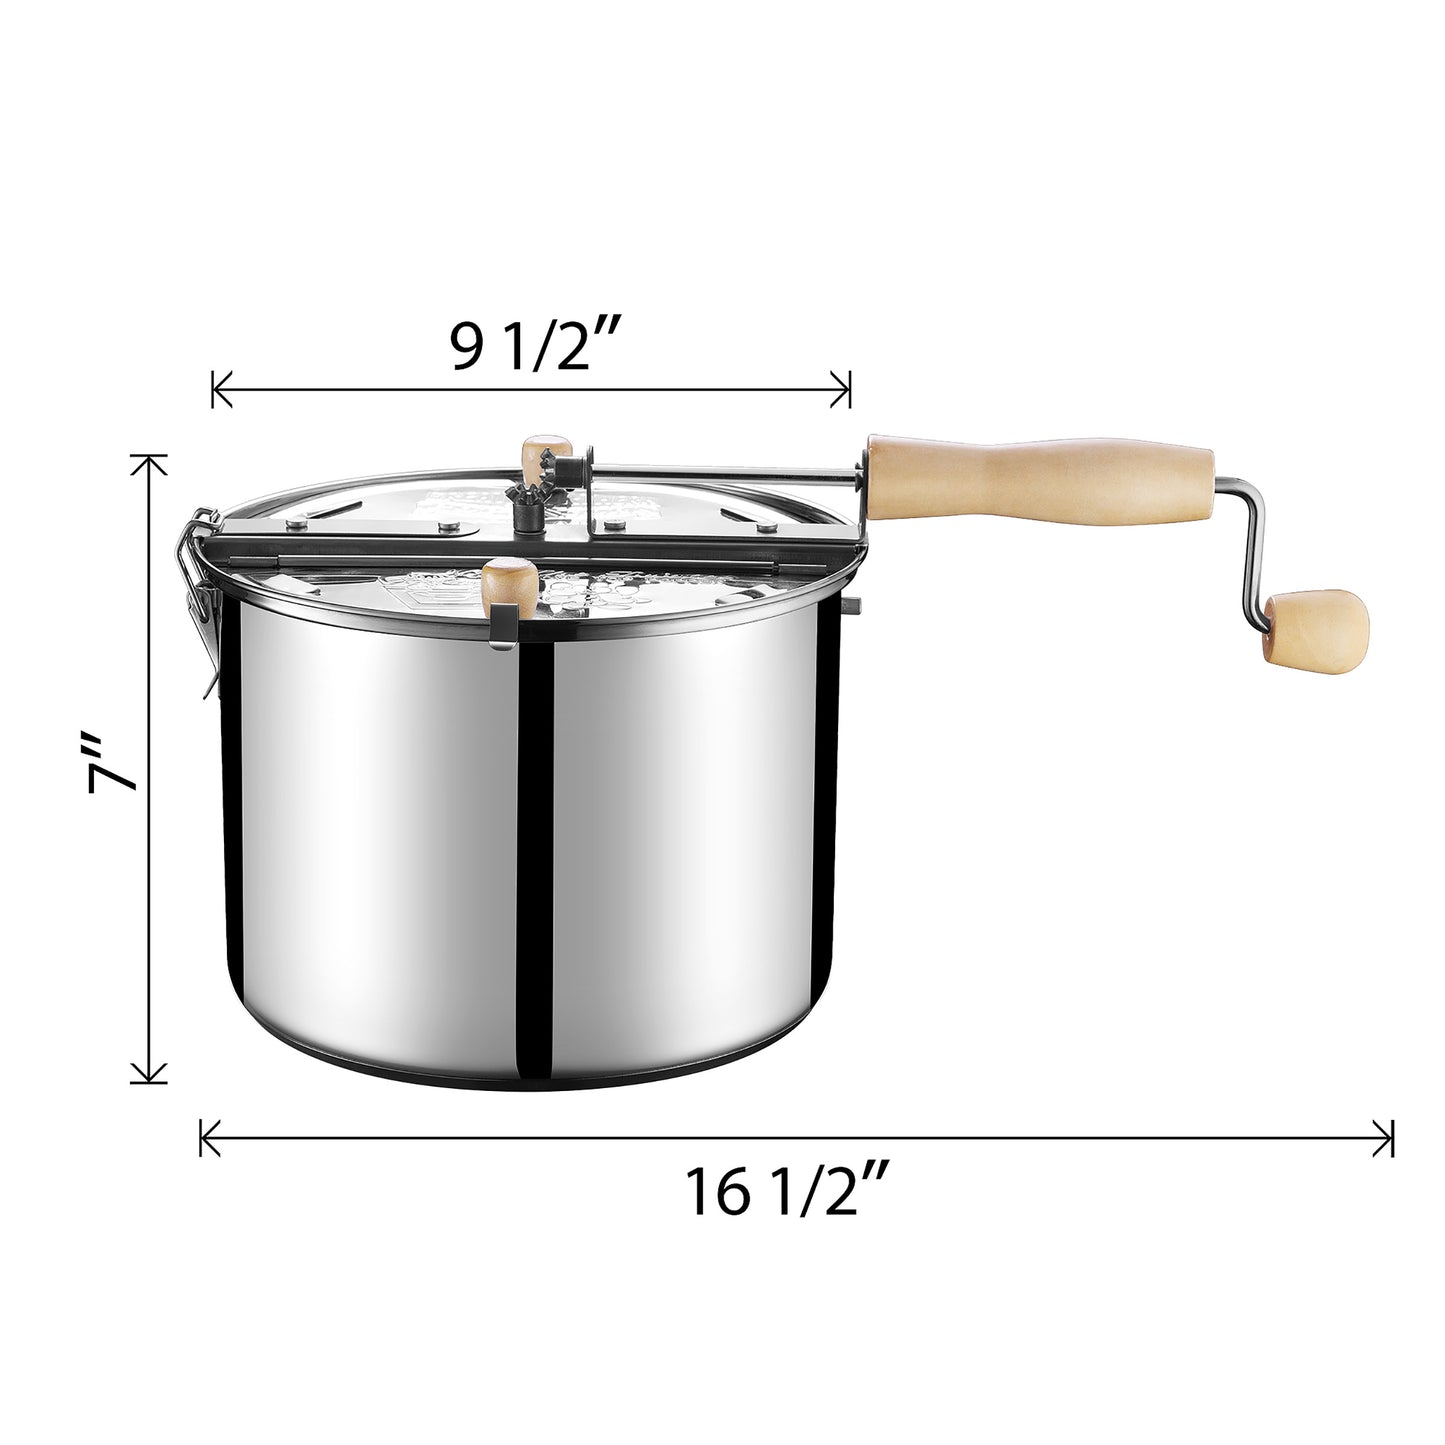 6.5 Quart Stovetop Popcorn Maker  - Silver